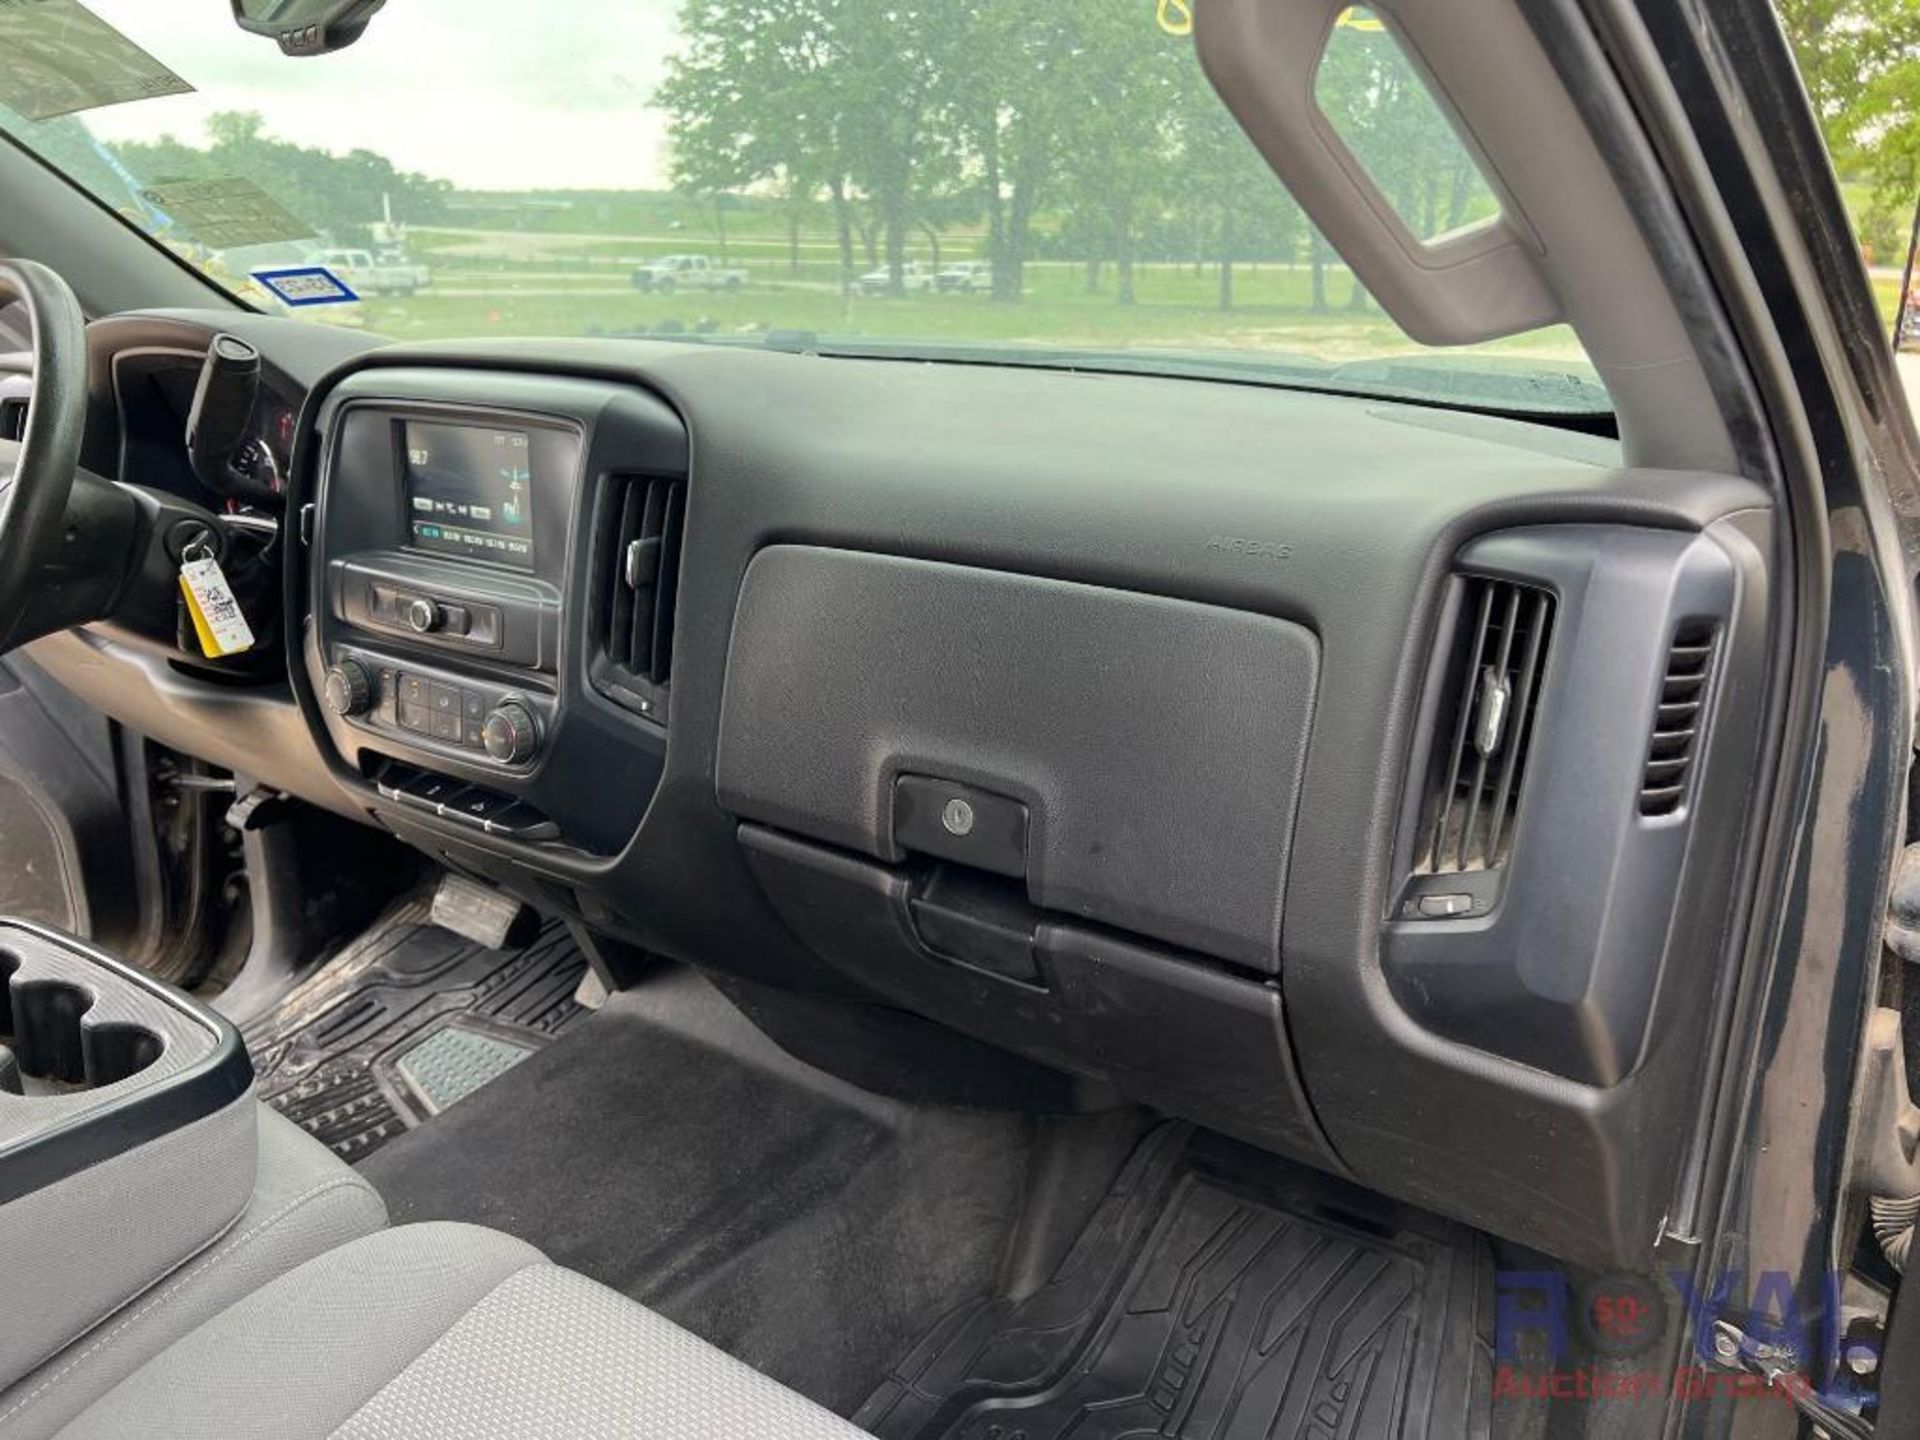 2018 Chevrolet Silverado 4x4 Crew Cab Pickup Truck - Image 41 of 51